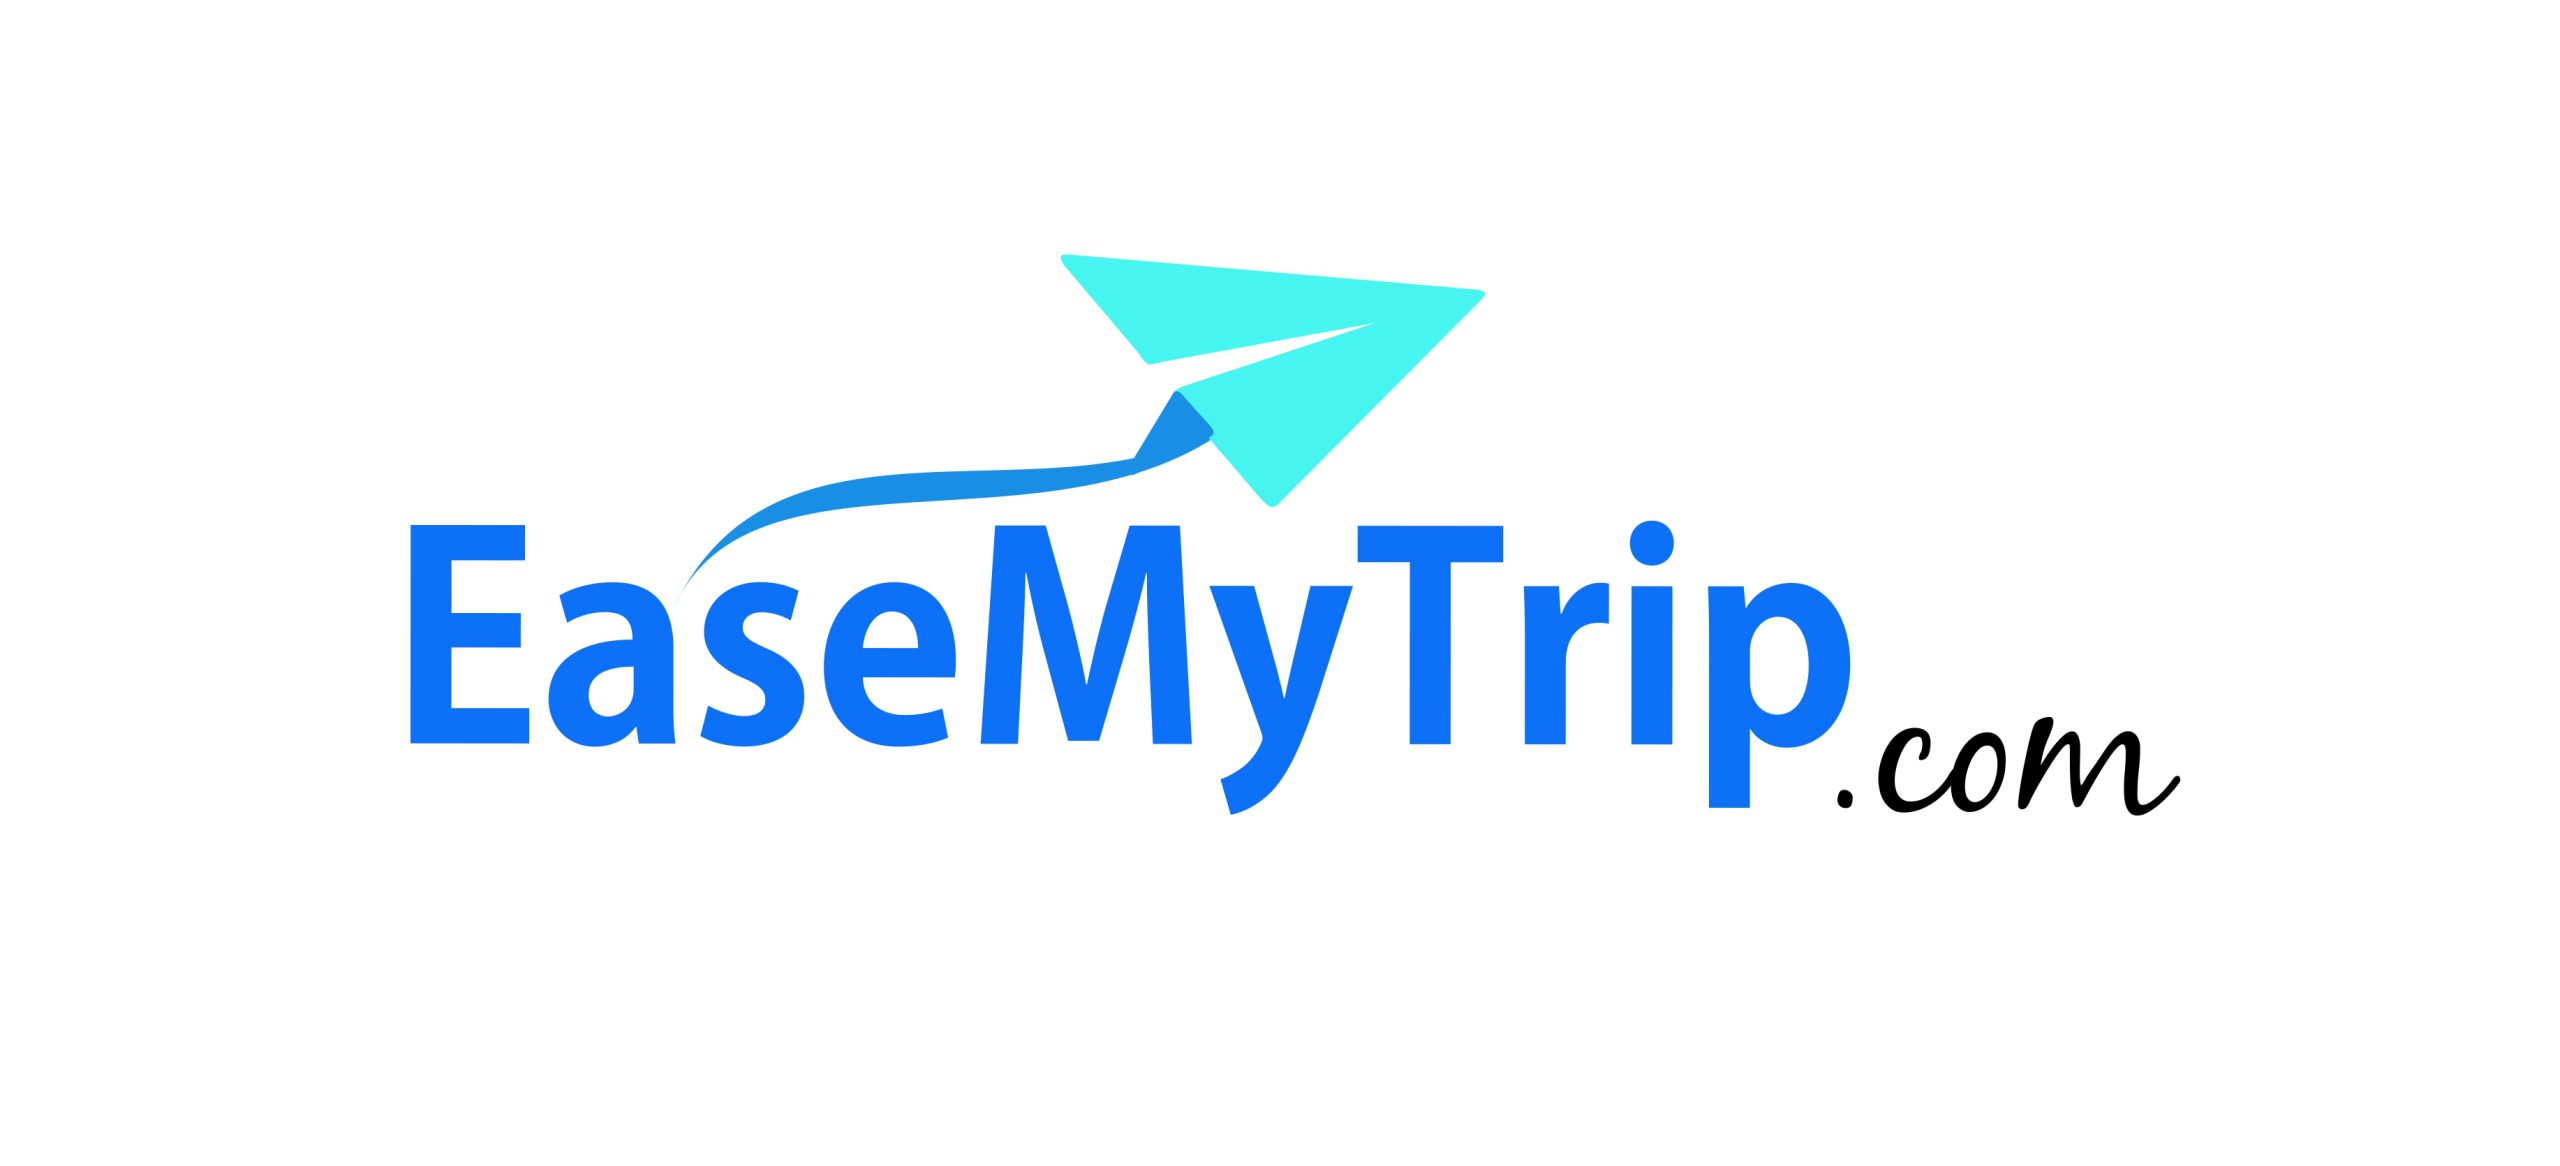 EaseMyTrip Flight, Hotel, Bus - Apps on Google Play